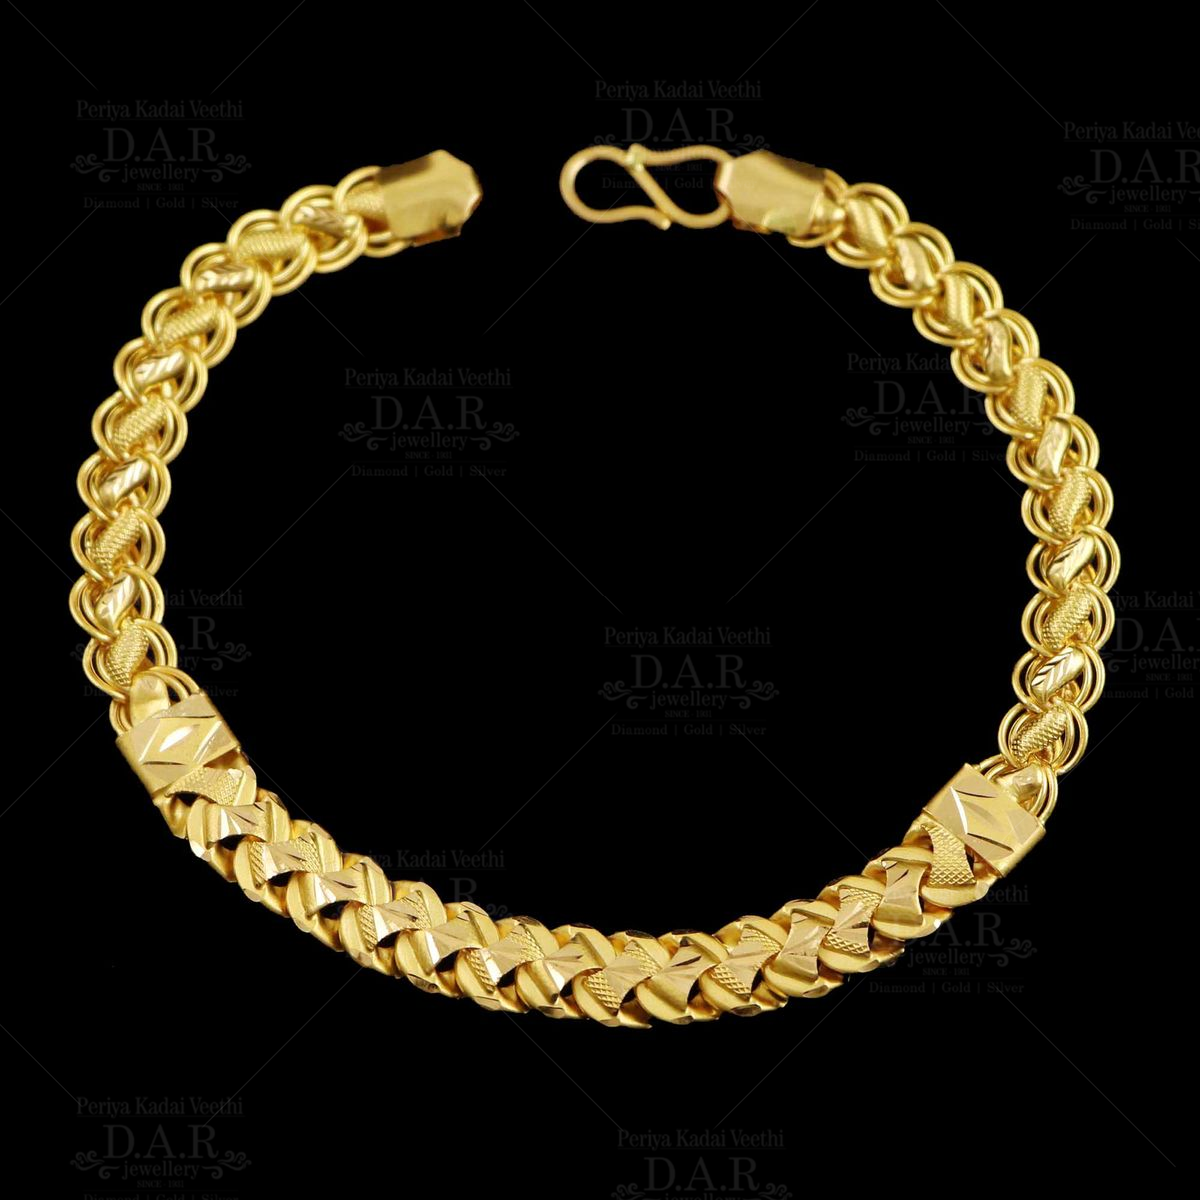 Men's Gold Fancy Bracelets at 100000.00 INR in Bengaluru | Rishabh Gold  Palace